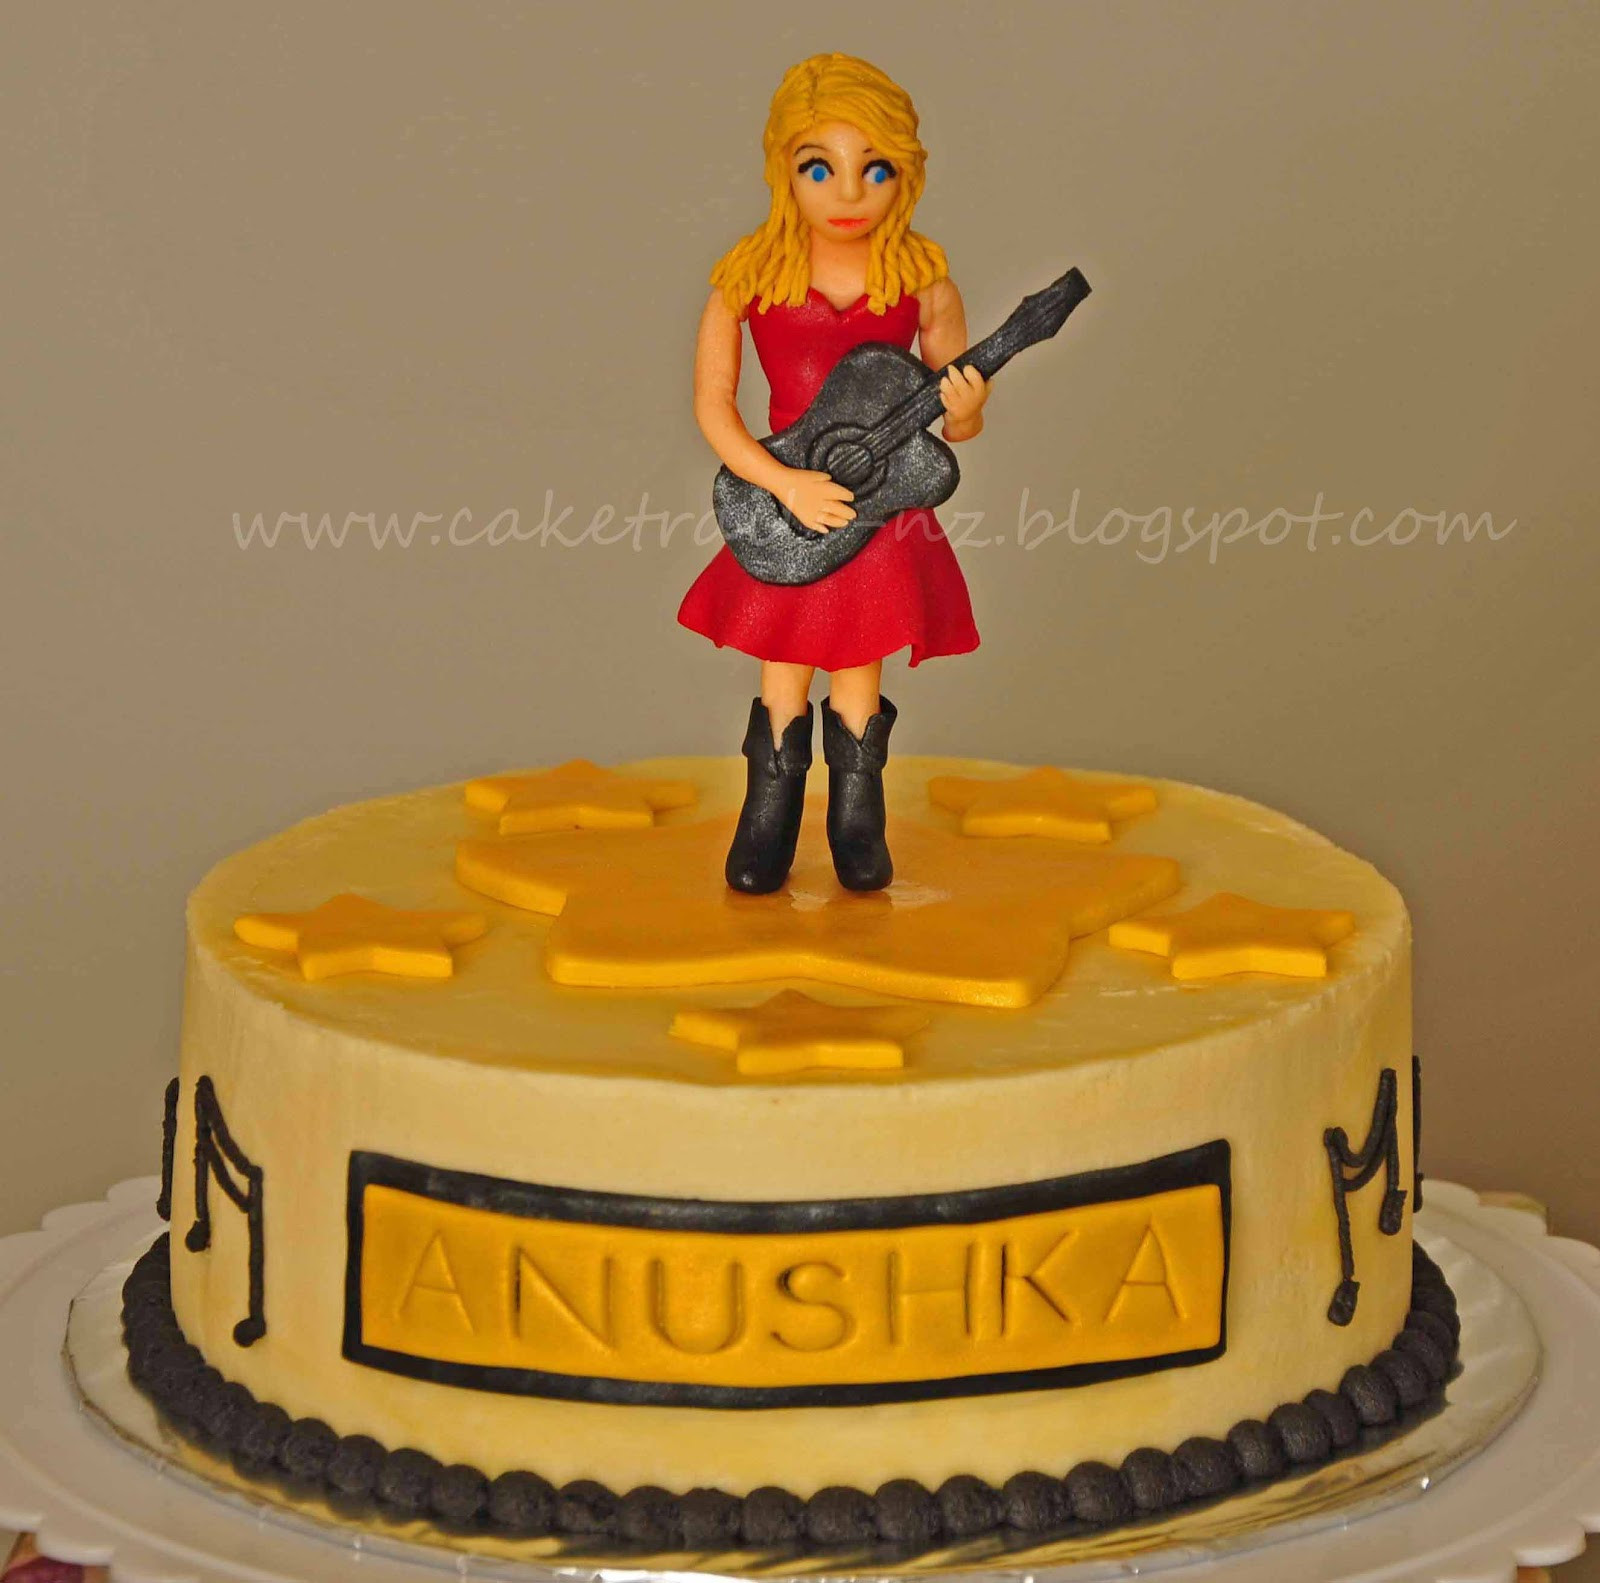 Taylor Swift Birthday Cake
 Cake Trails Taylor Swift birthday cake